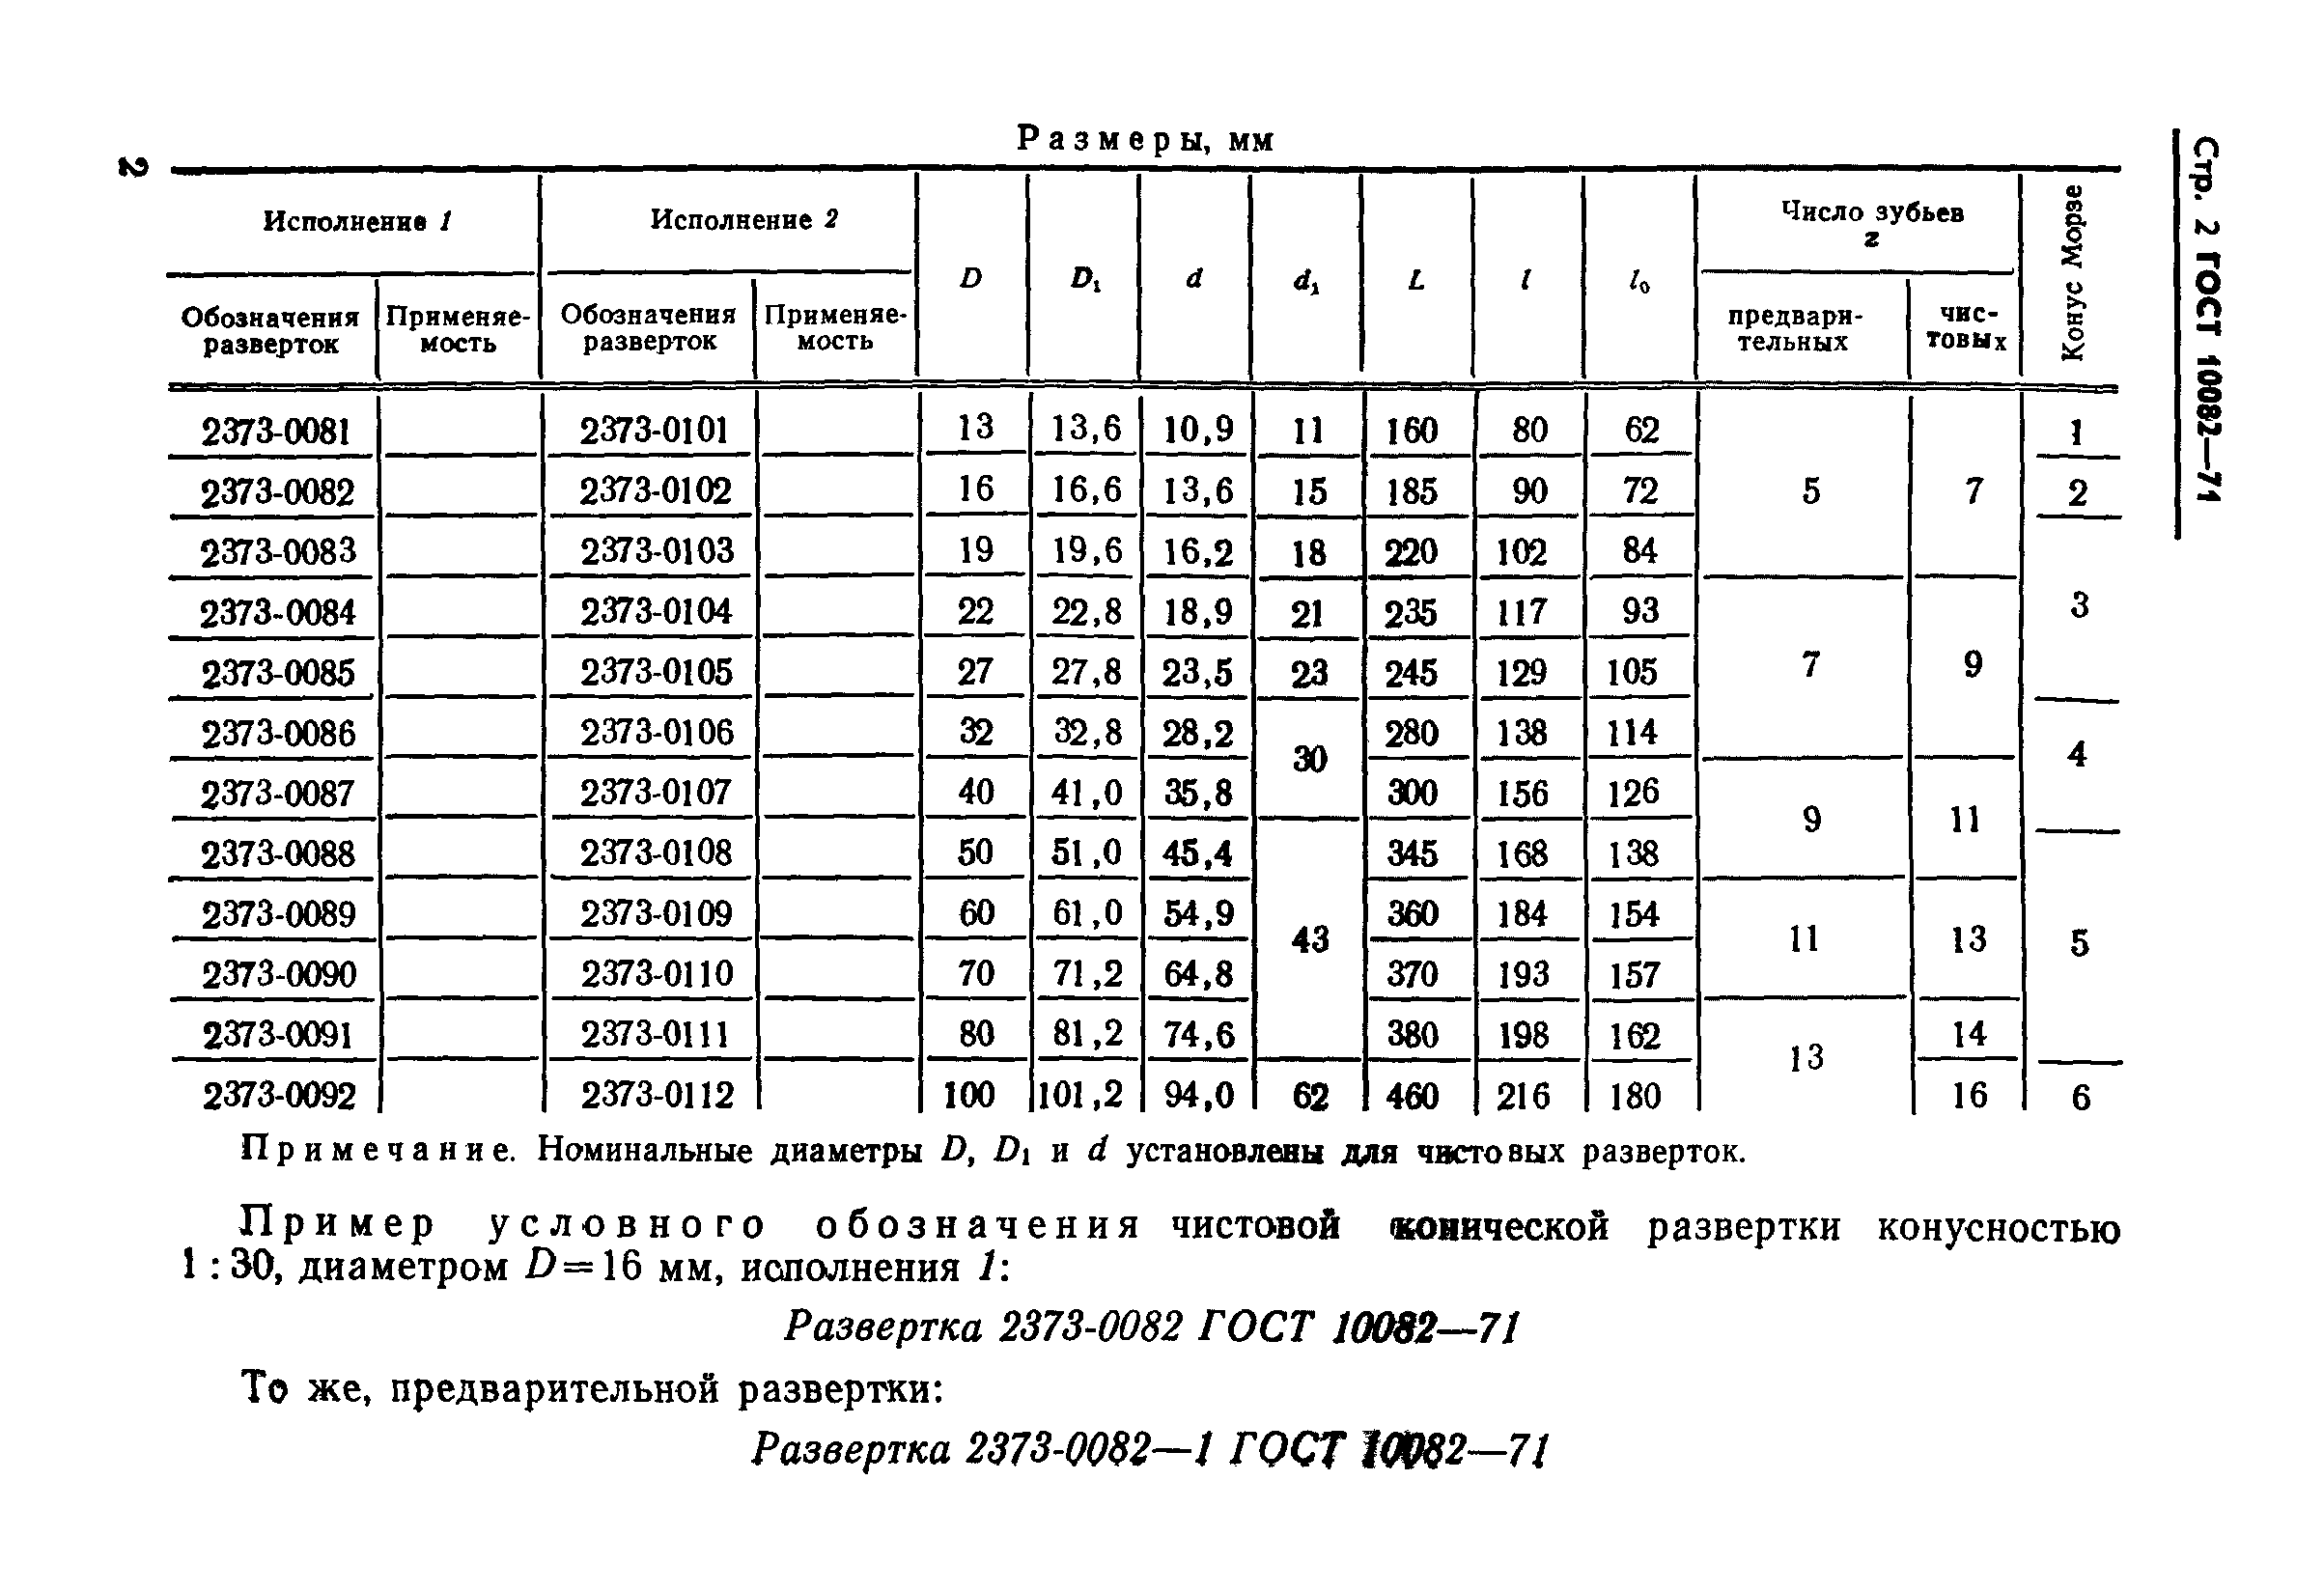 ГОСТ 10082-71